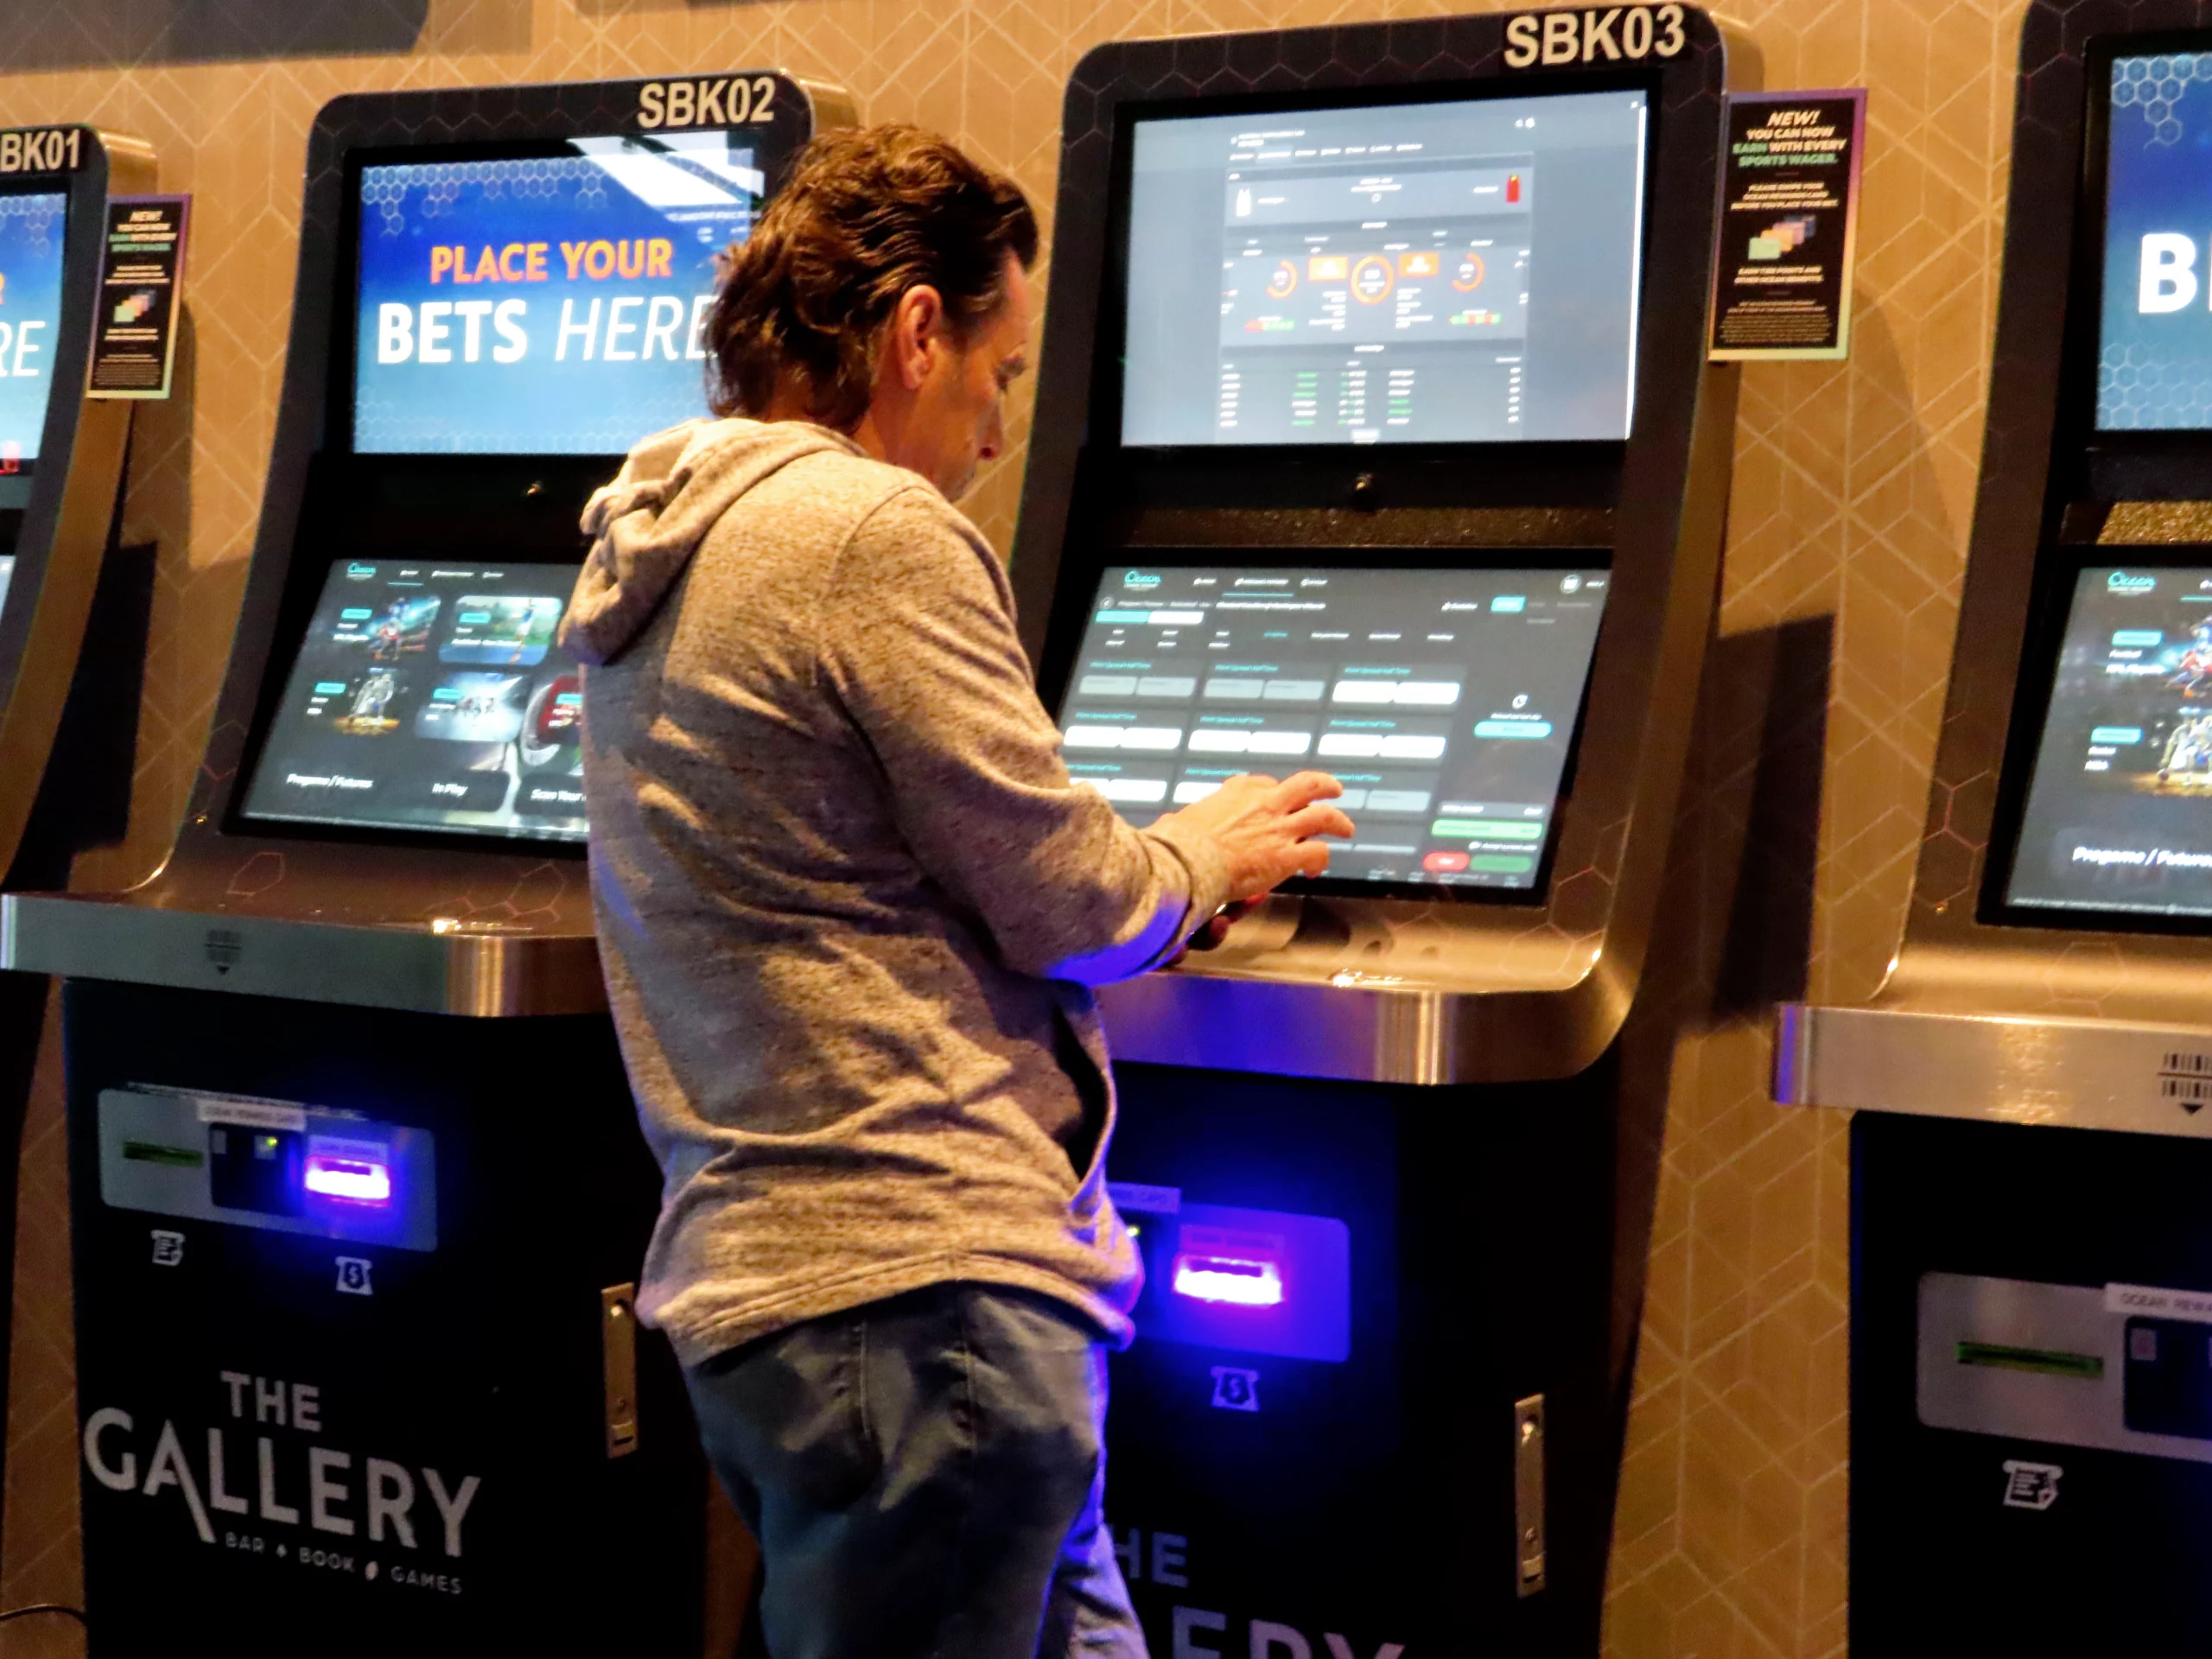 man performing online gambling activity